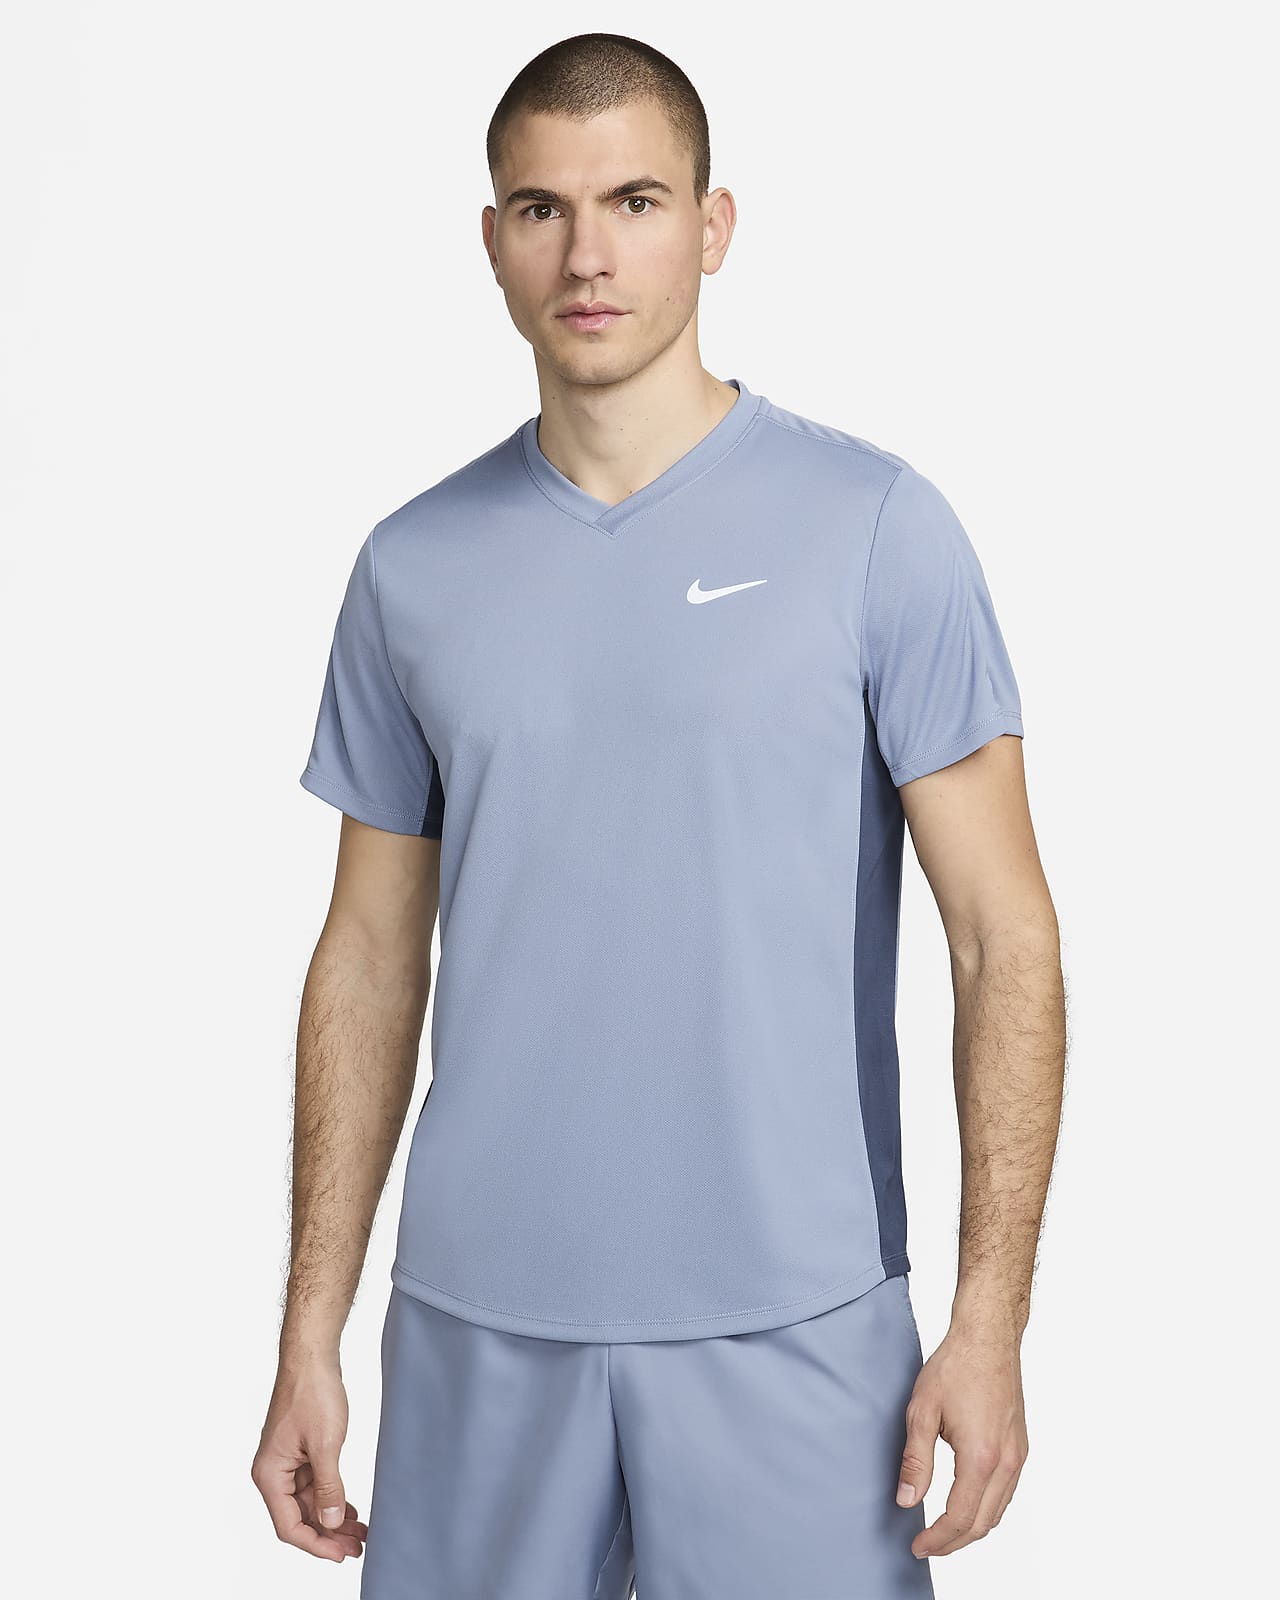 Men's Grey Tops & T-Shirts. Nike CA